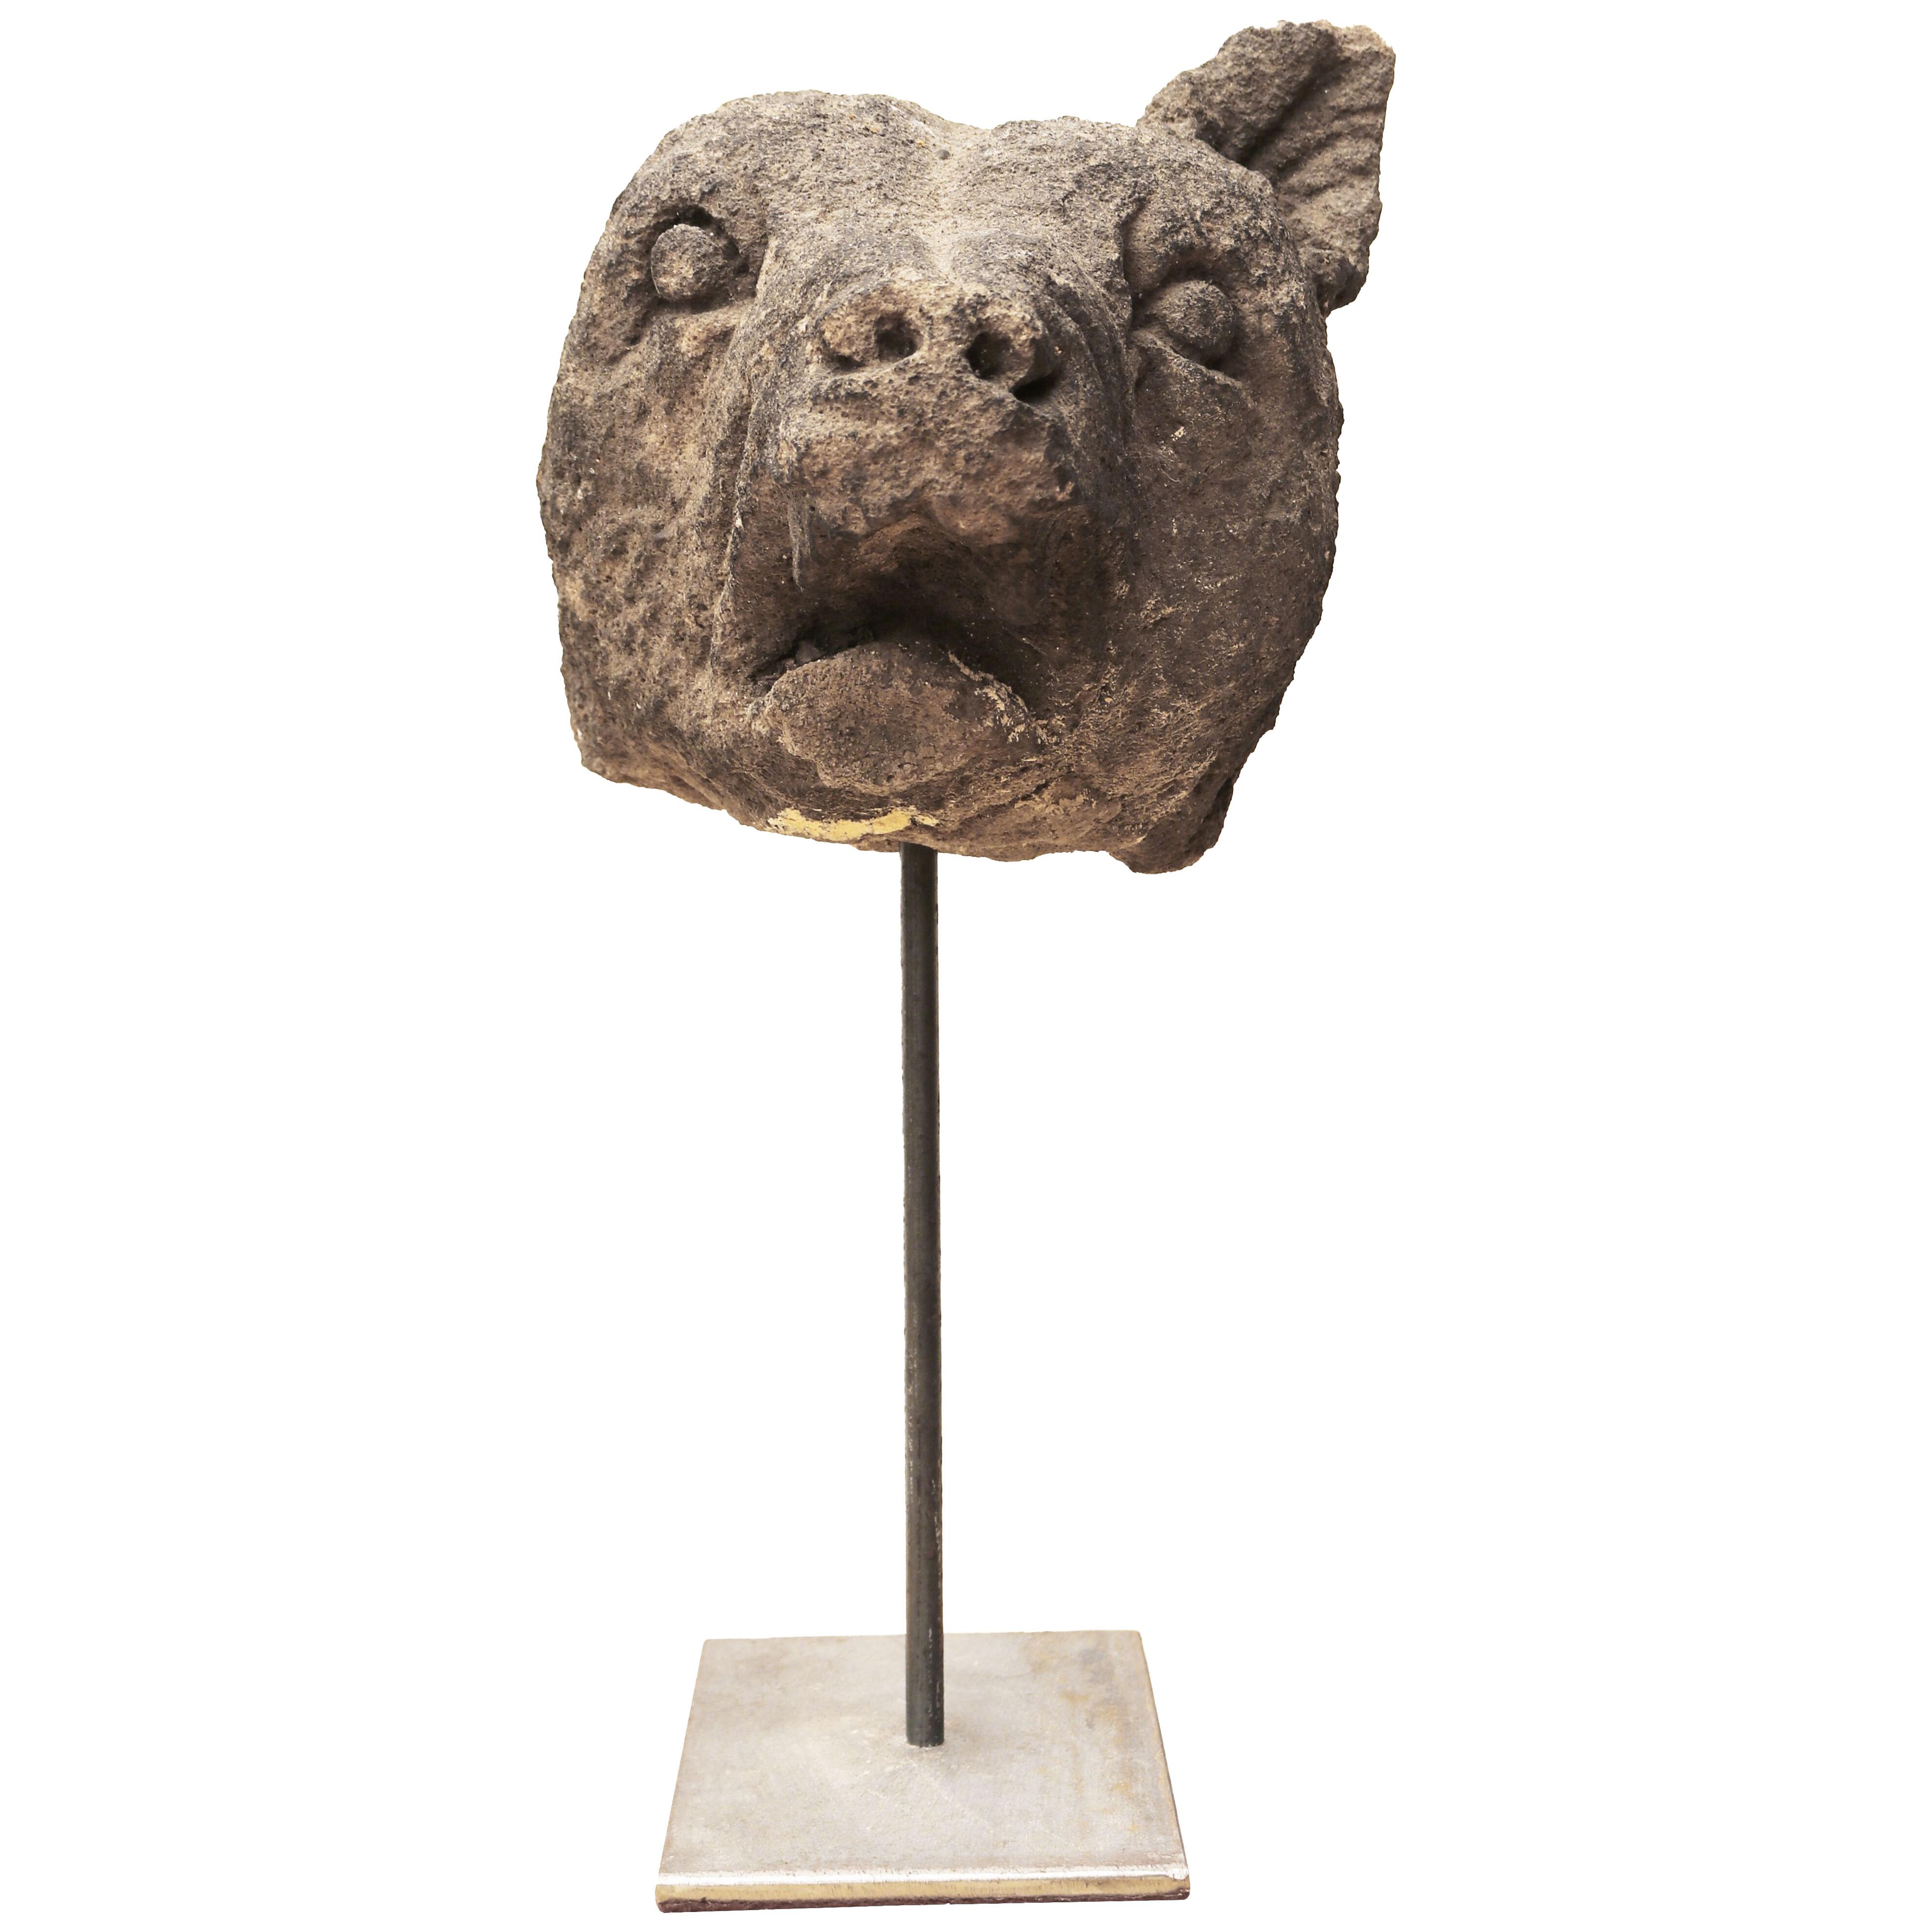 An Antique Carved Stone Fox Head Sculpture